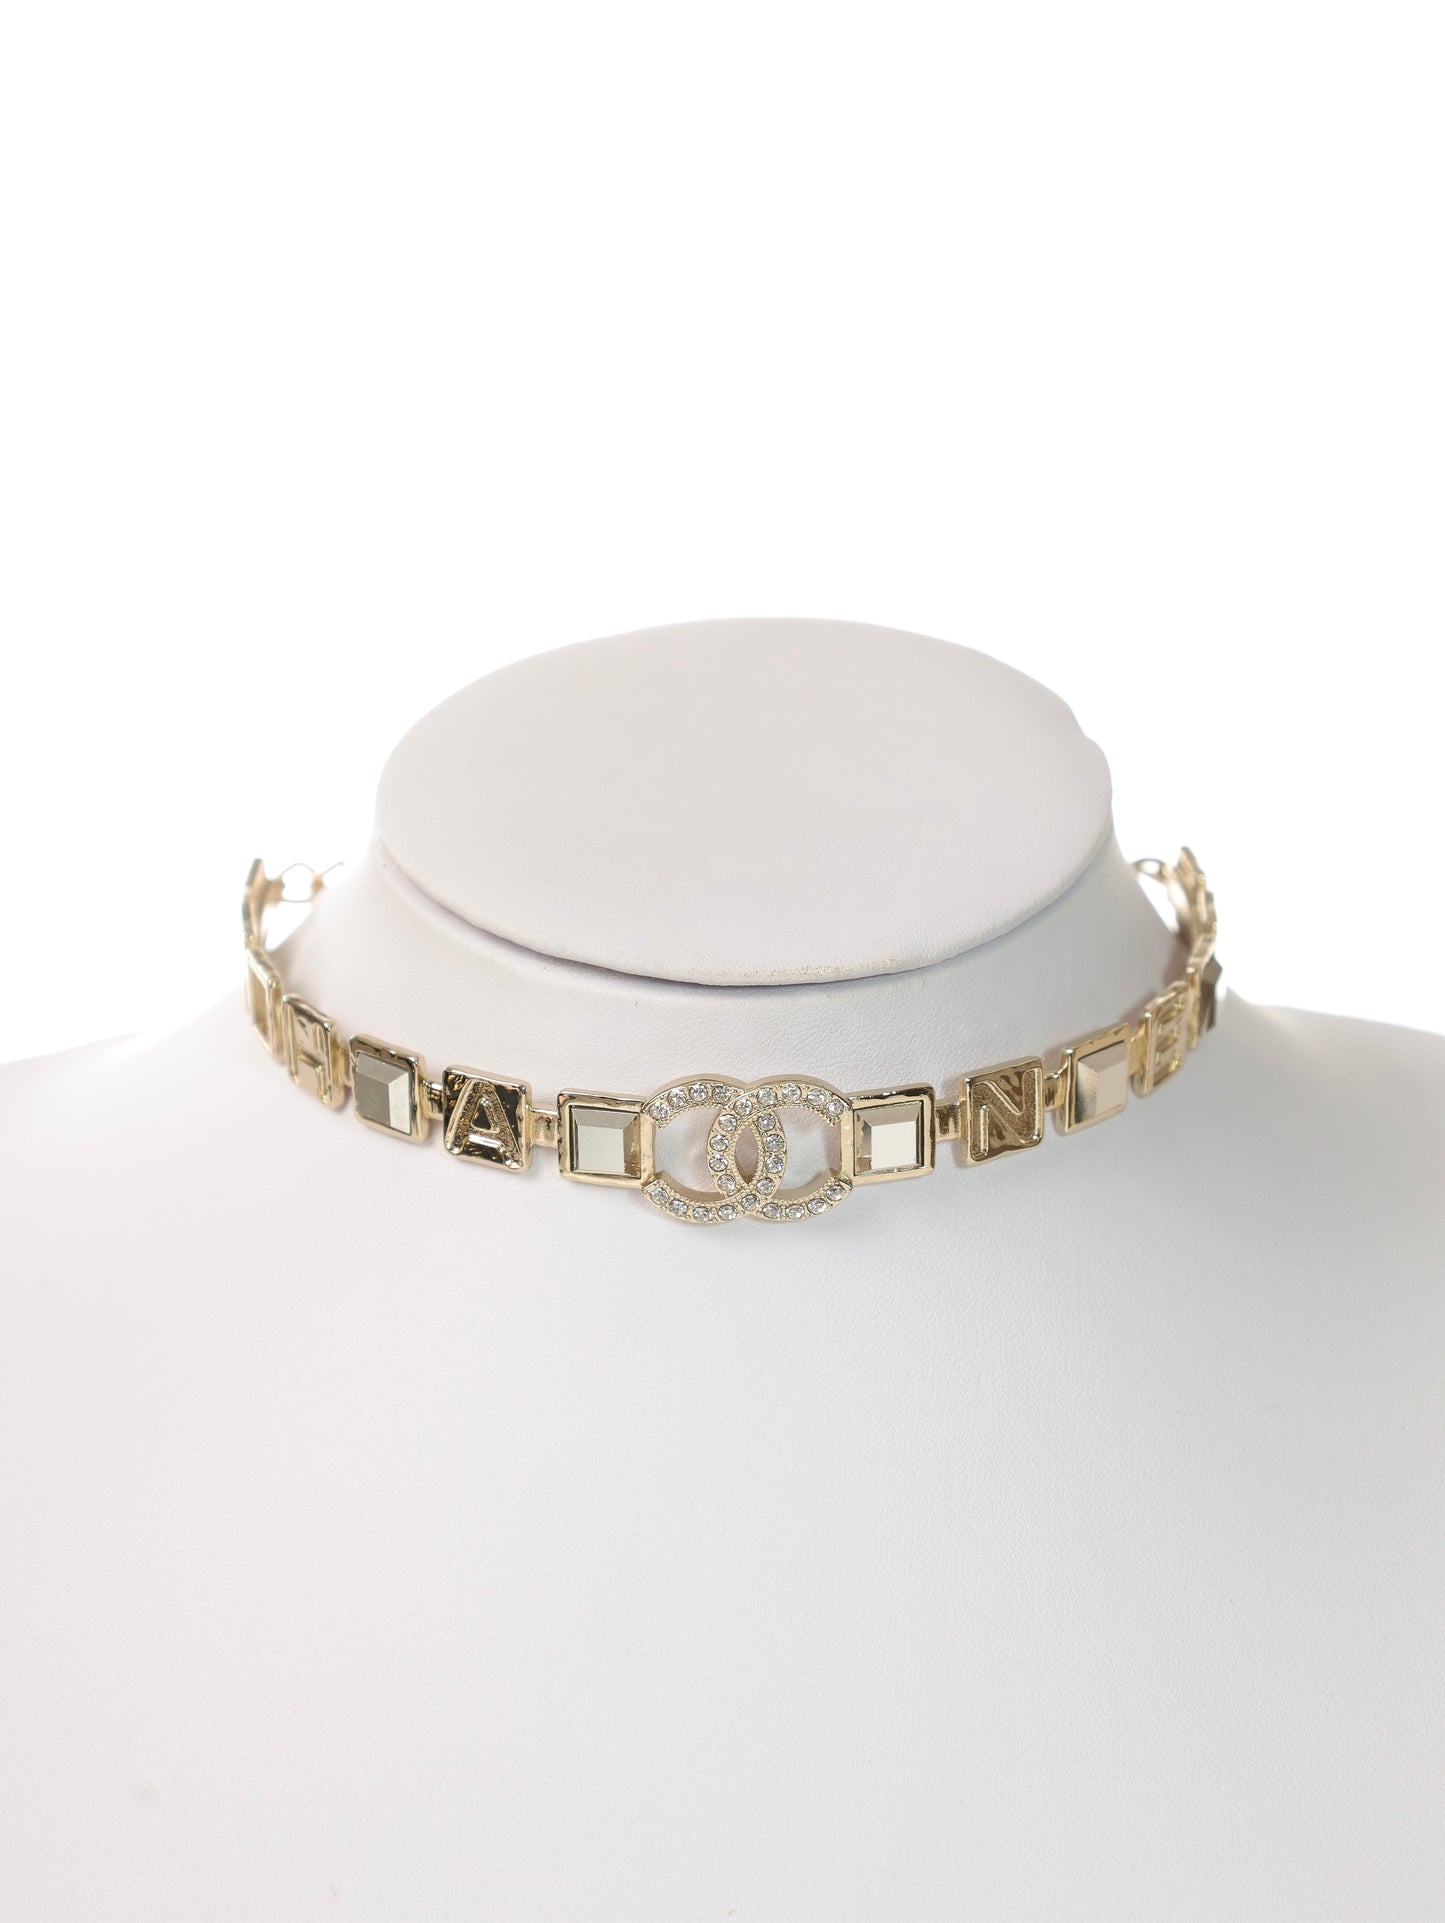 CHANEL Choker large CC chain CC necklace necklace rhinestone